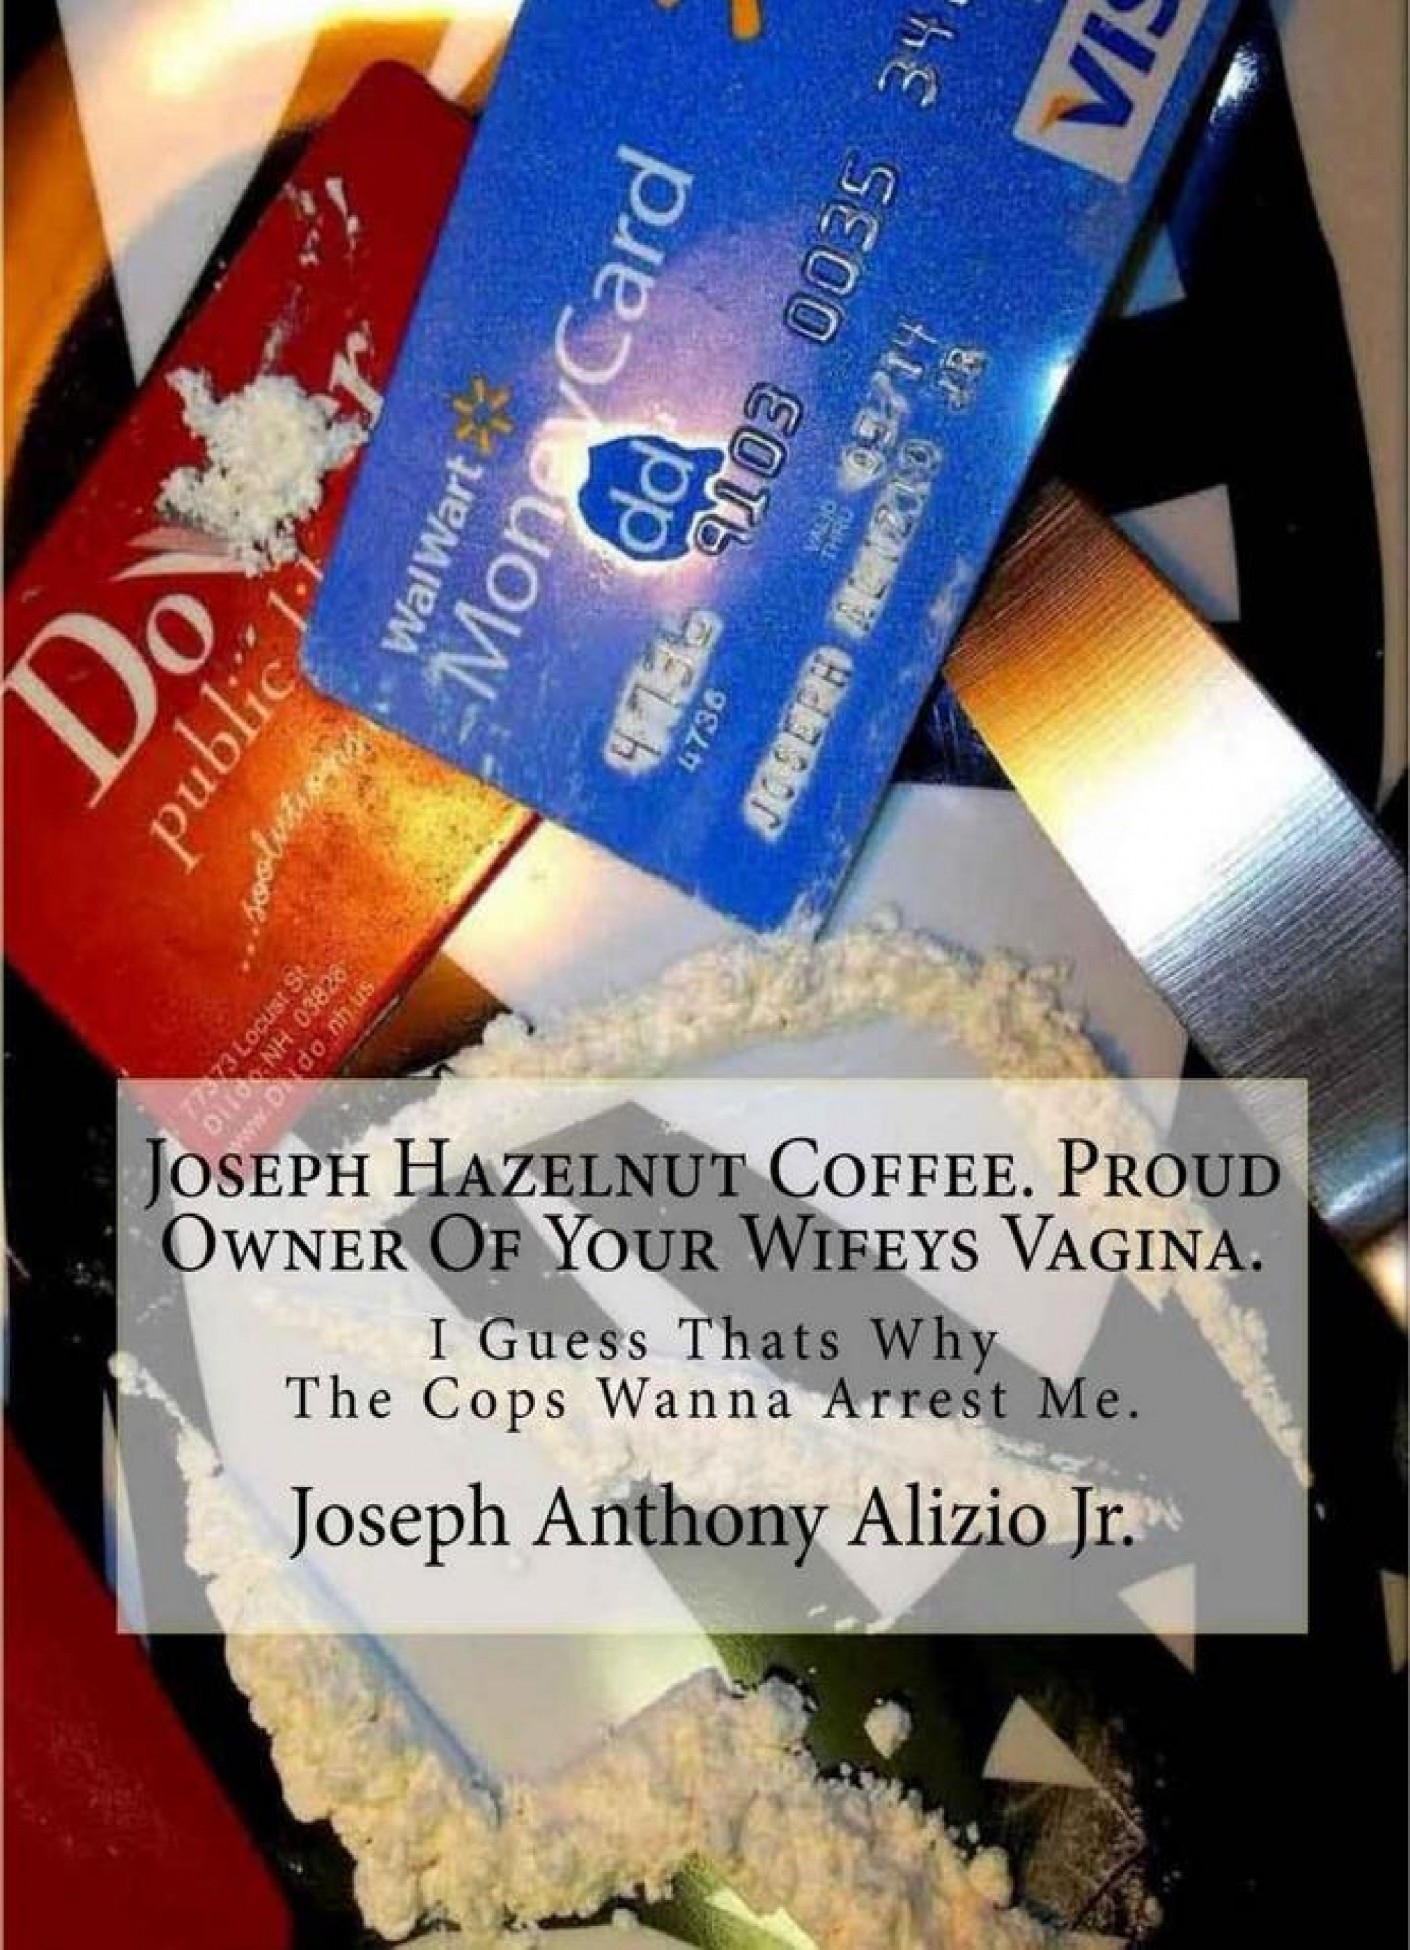 Joseph Hazelnut Coffee pic image